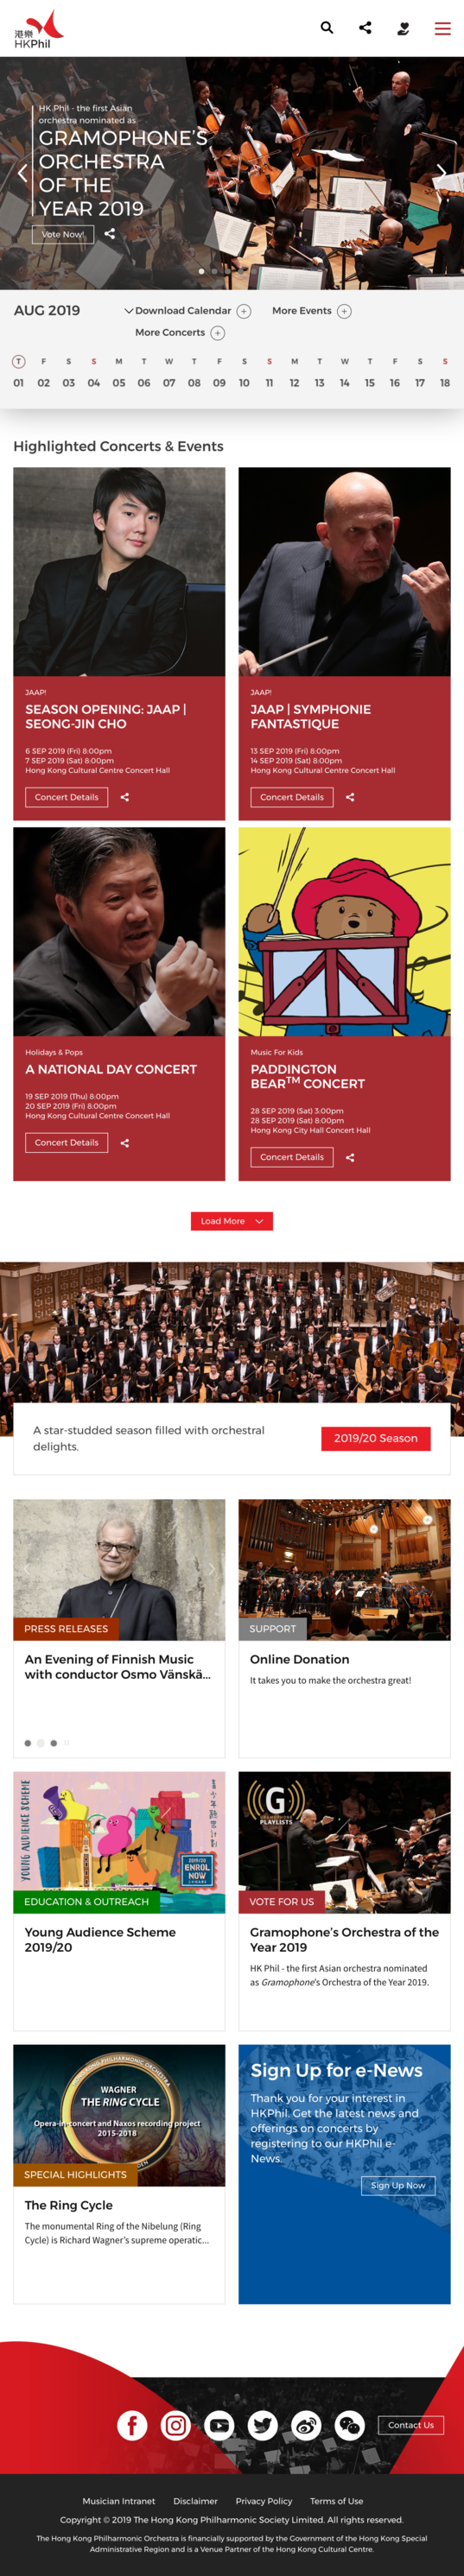 Hong Kong Philharmonic  website screenshot for tablet version 1 of 4